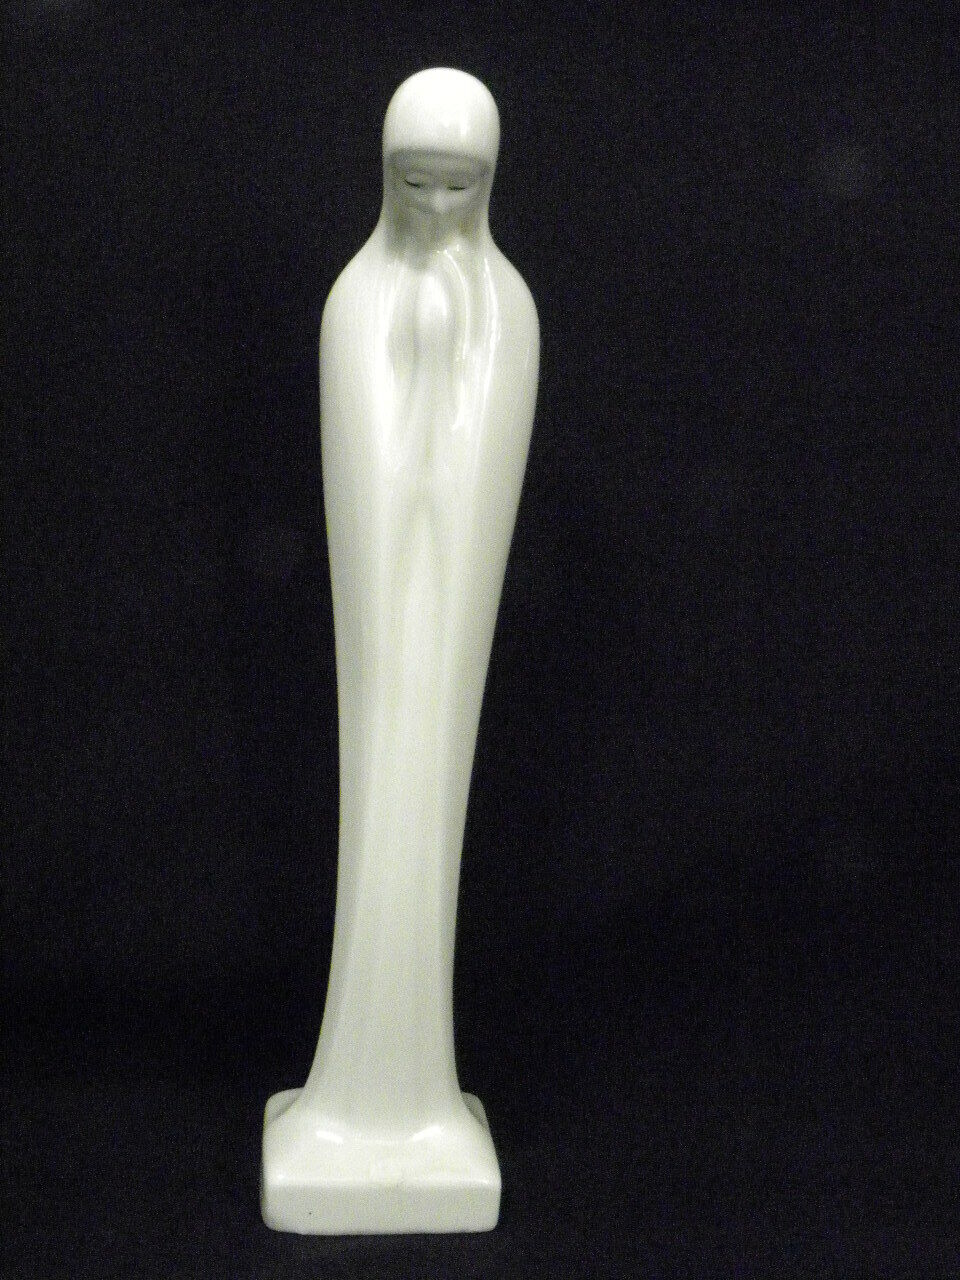 Vintage 1980 Handmade Sleek Modern White Ceramic Madonna Figure or Statue